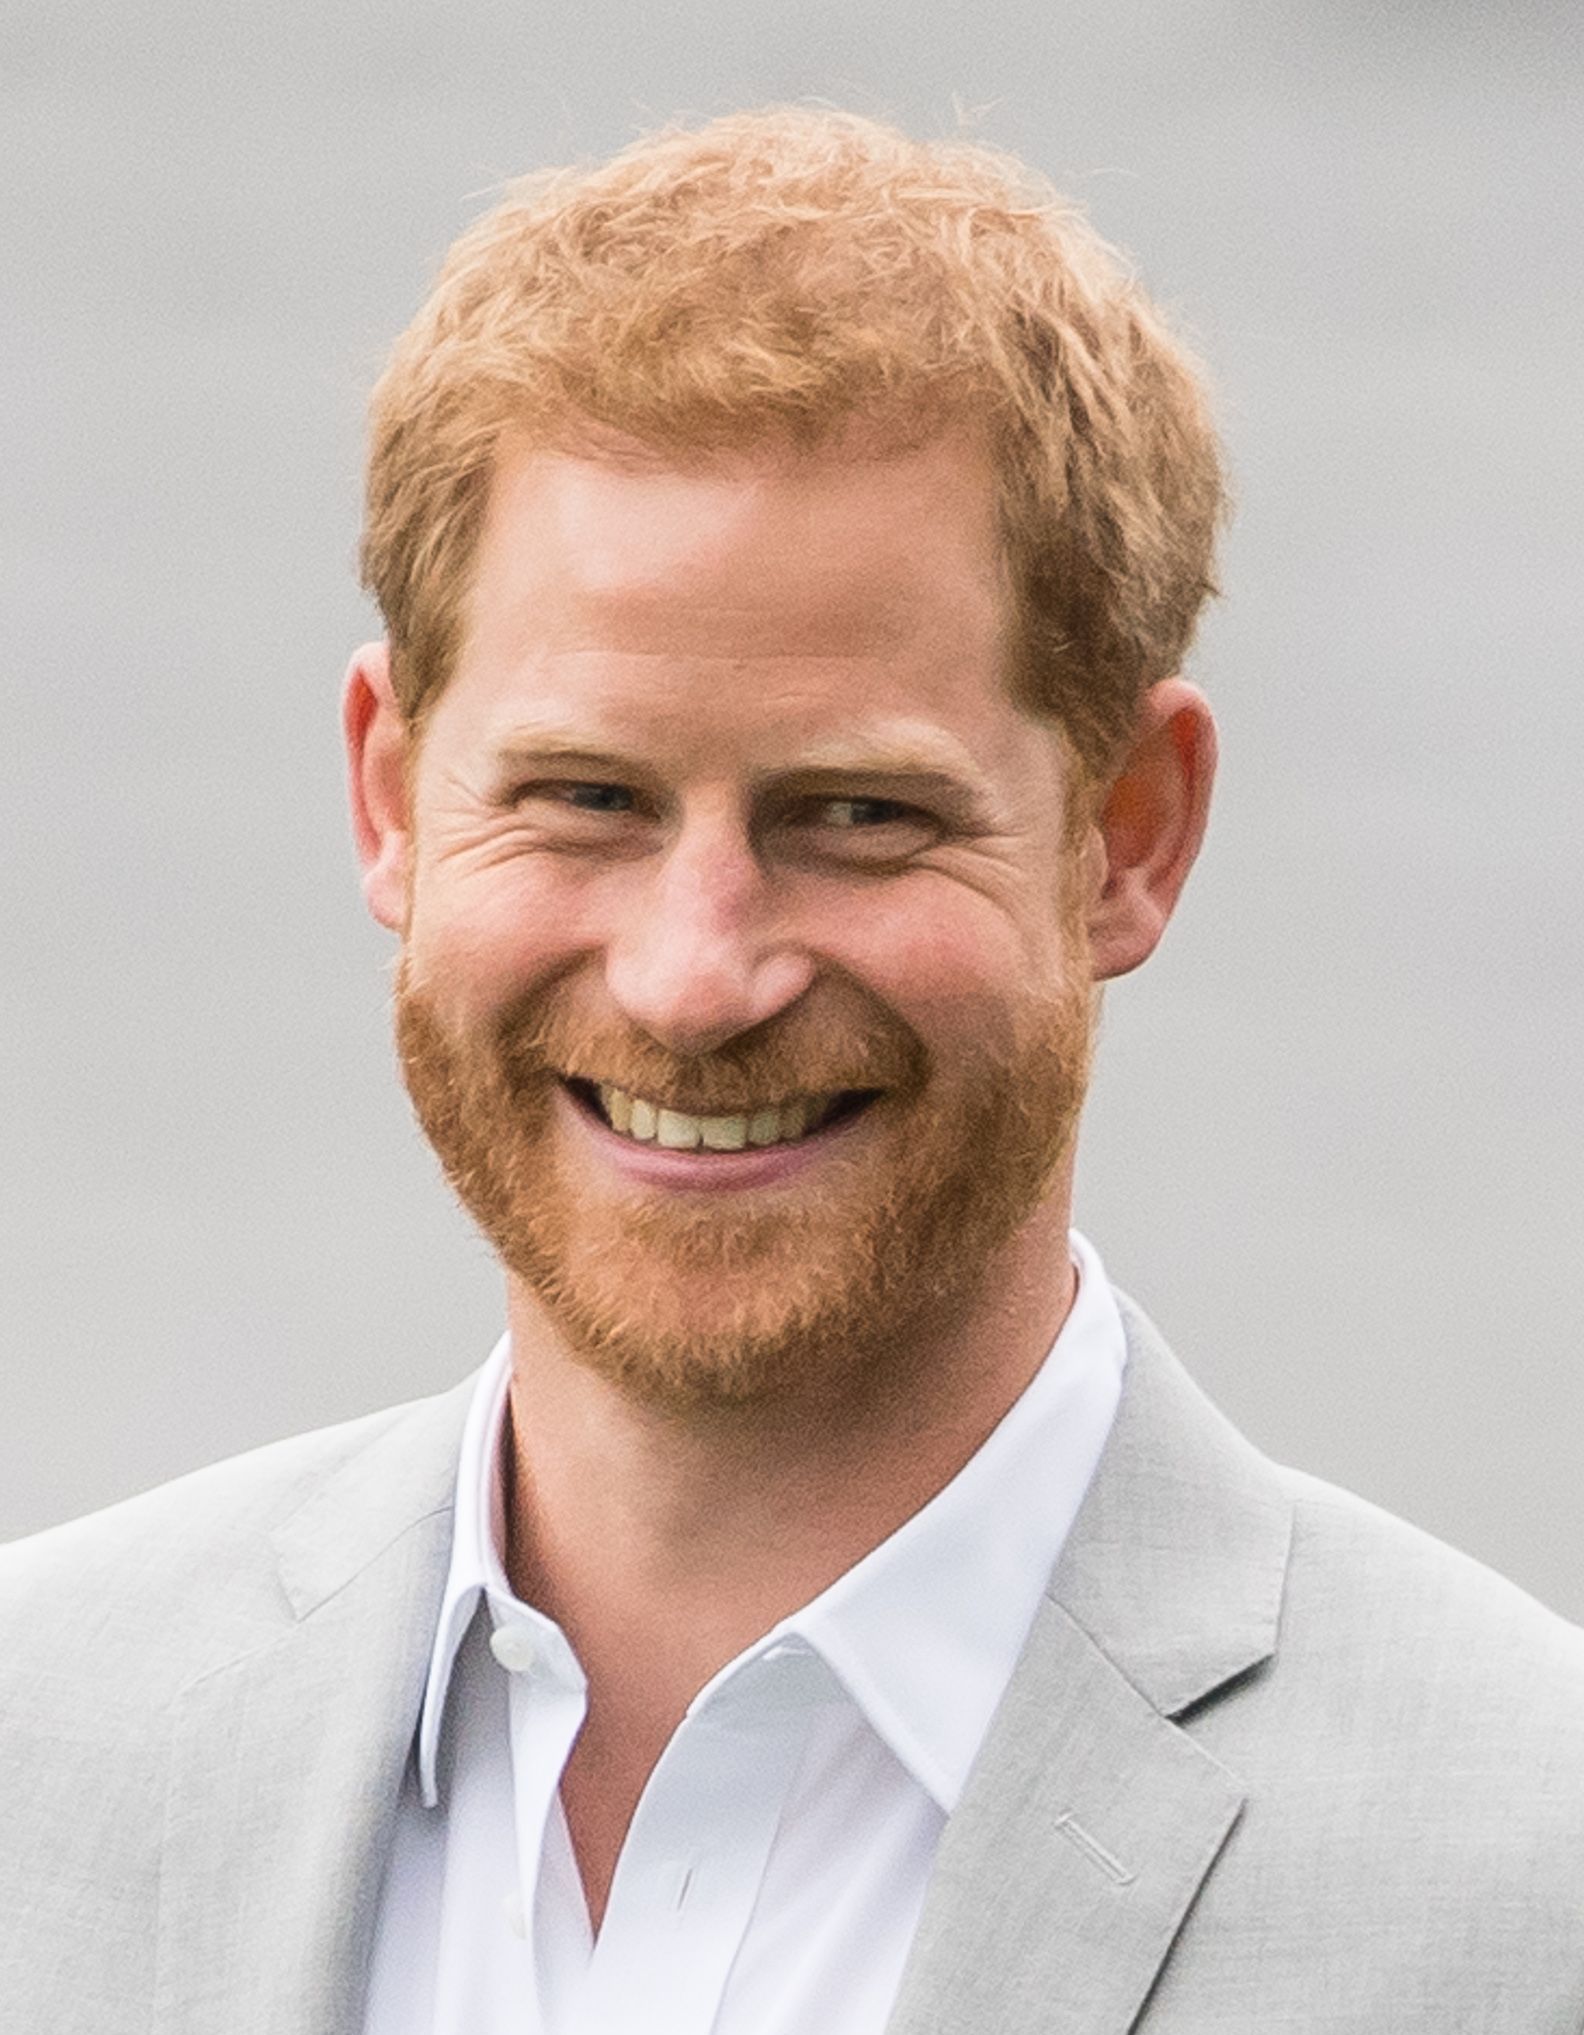 Prince Harry, Duke o Sussex - Wikipedia